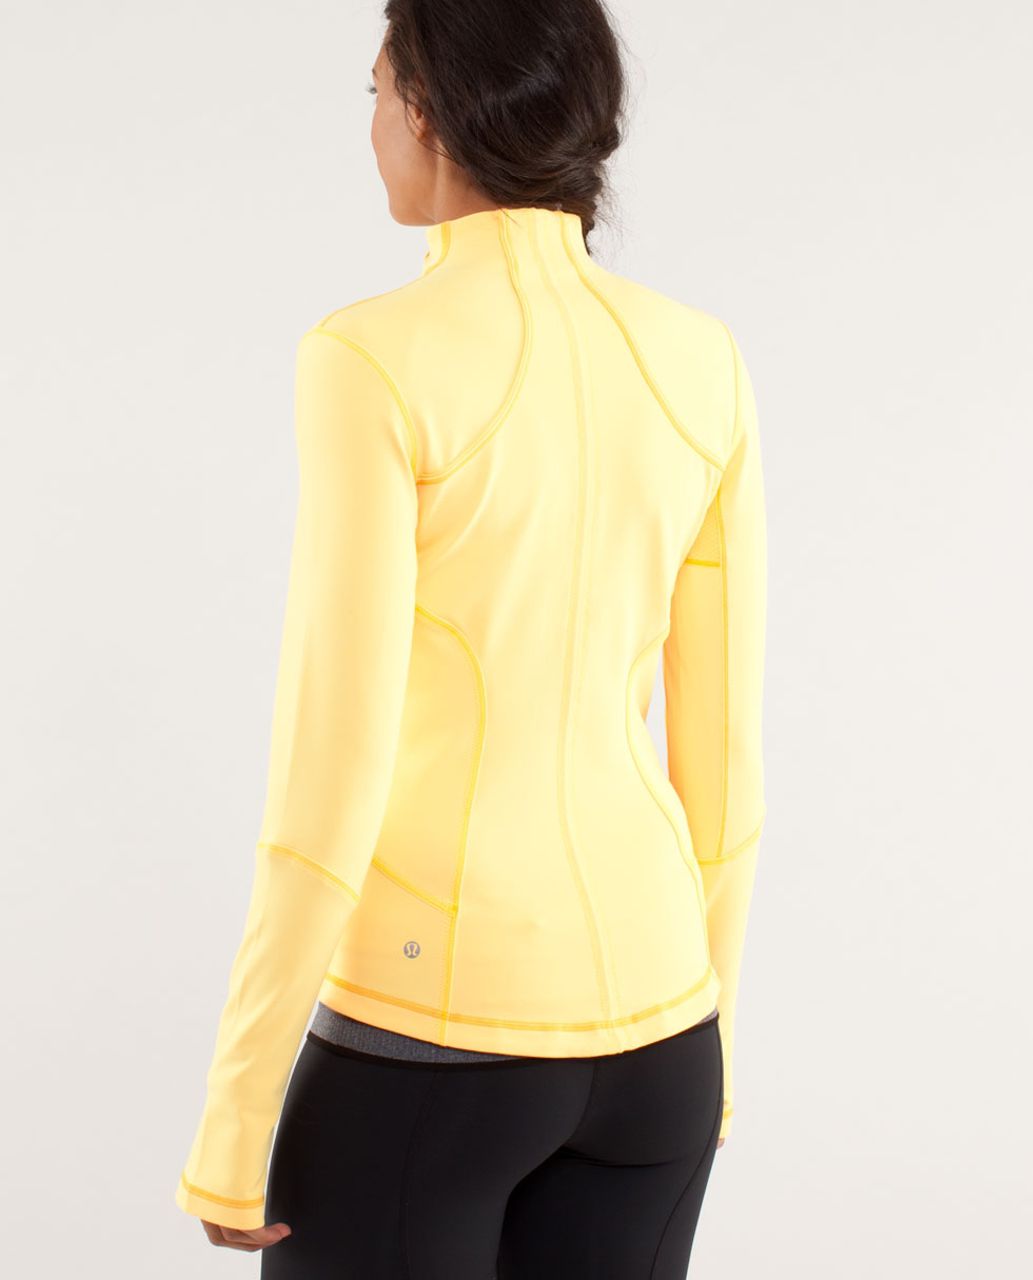 lululemon yellow jacket